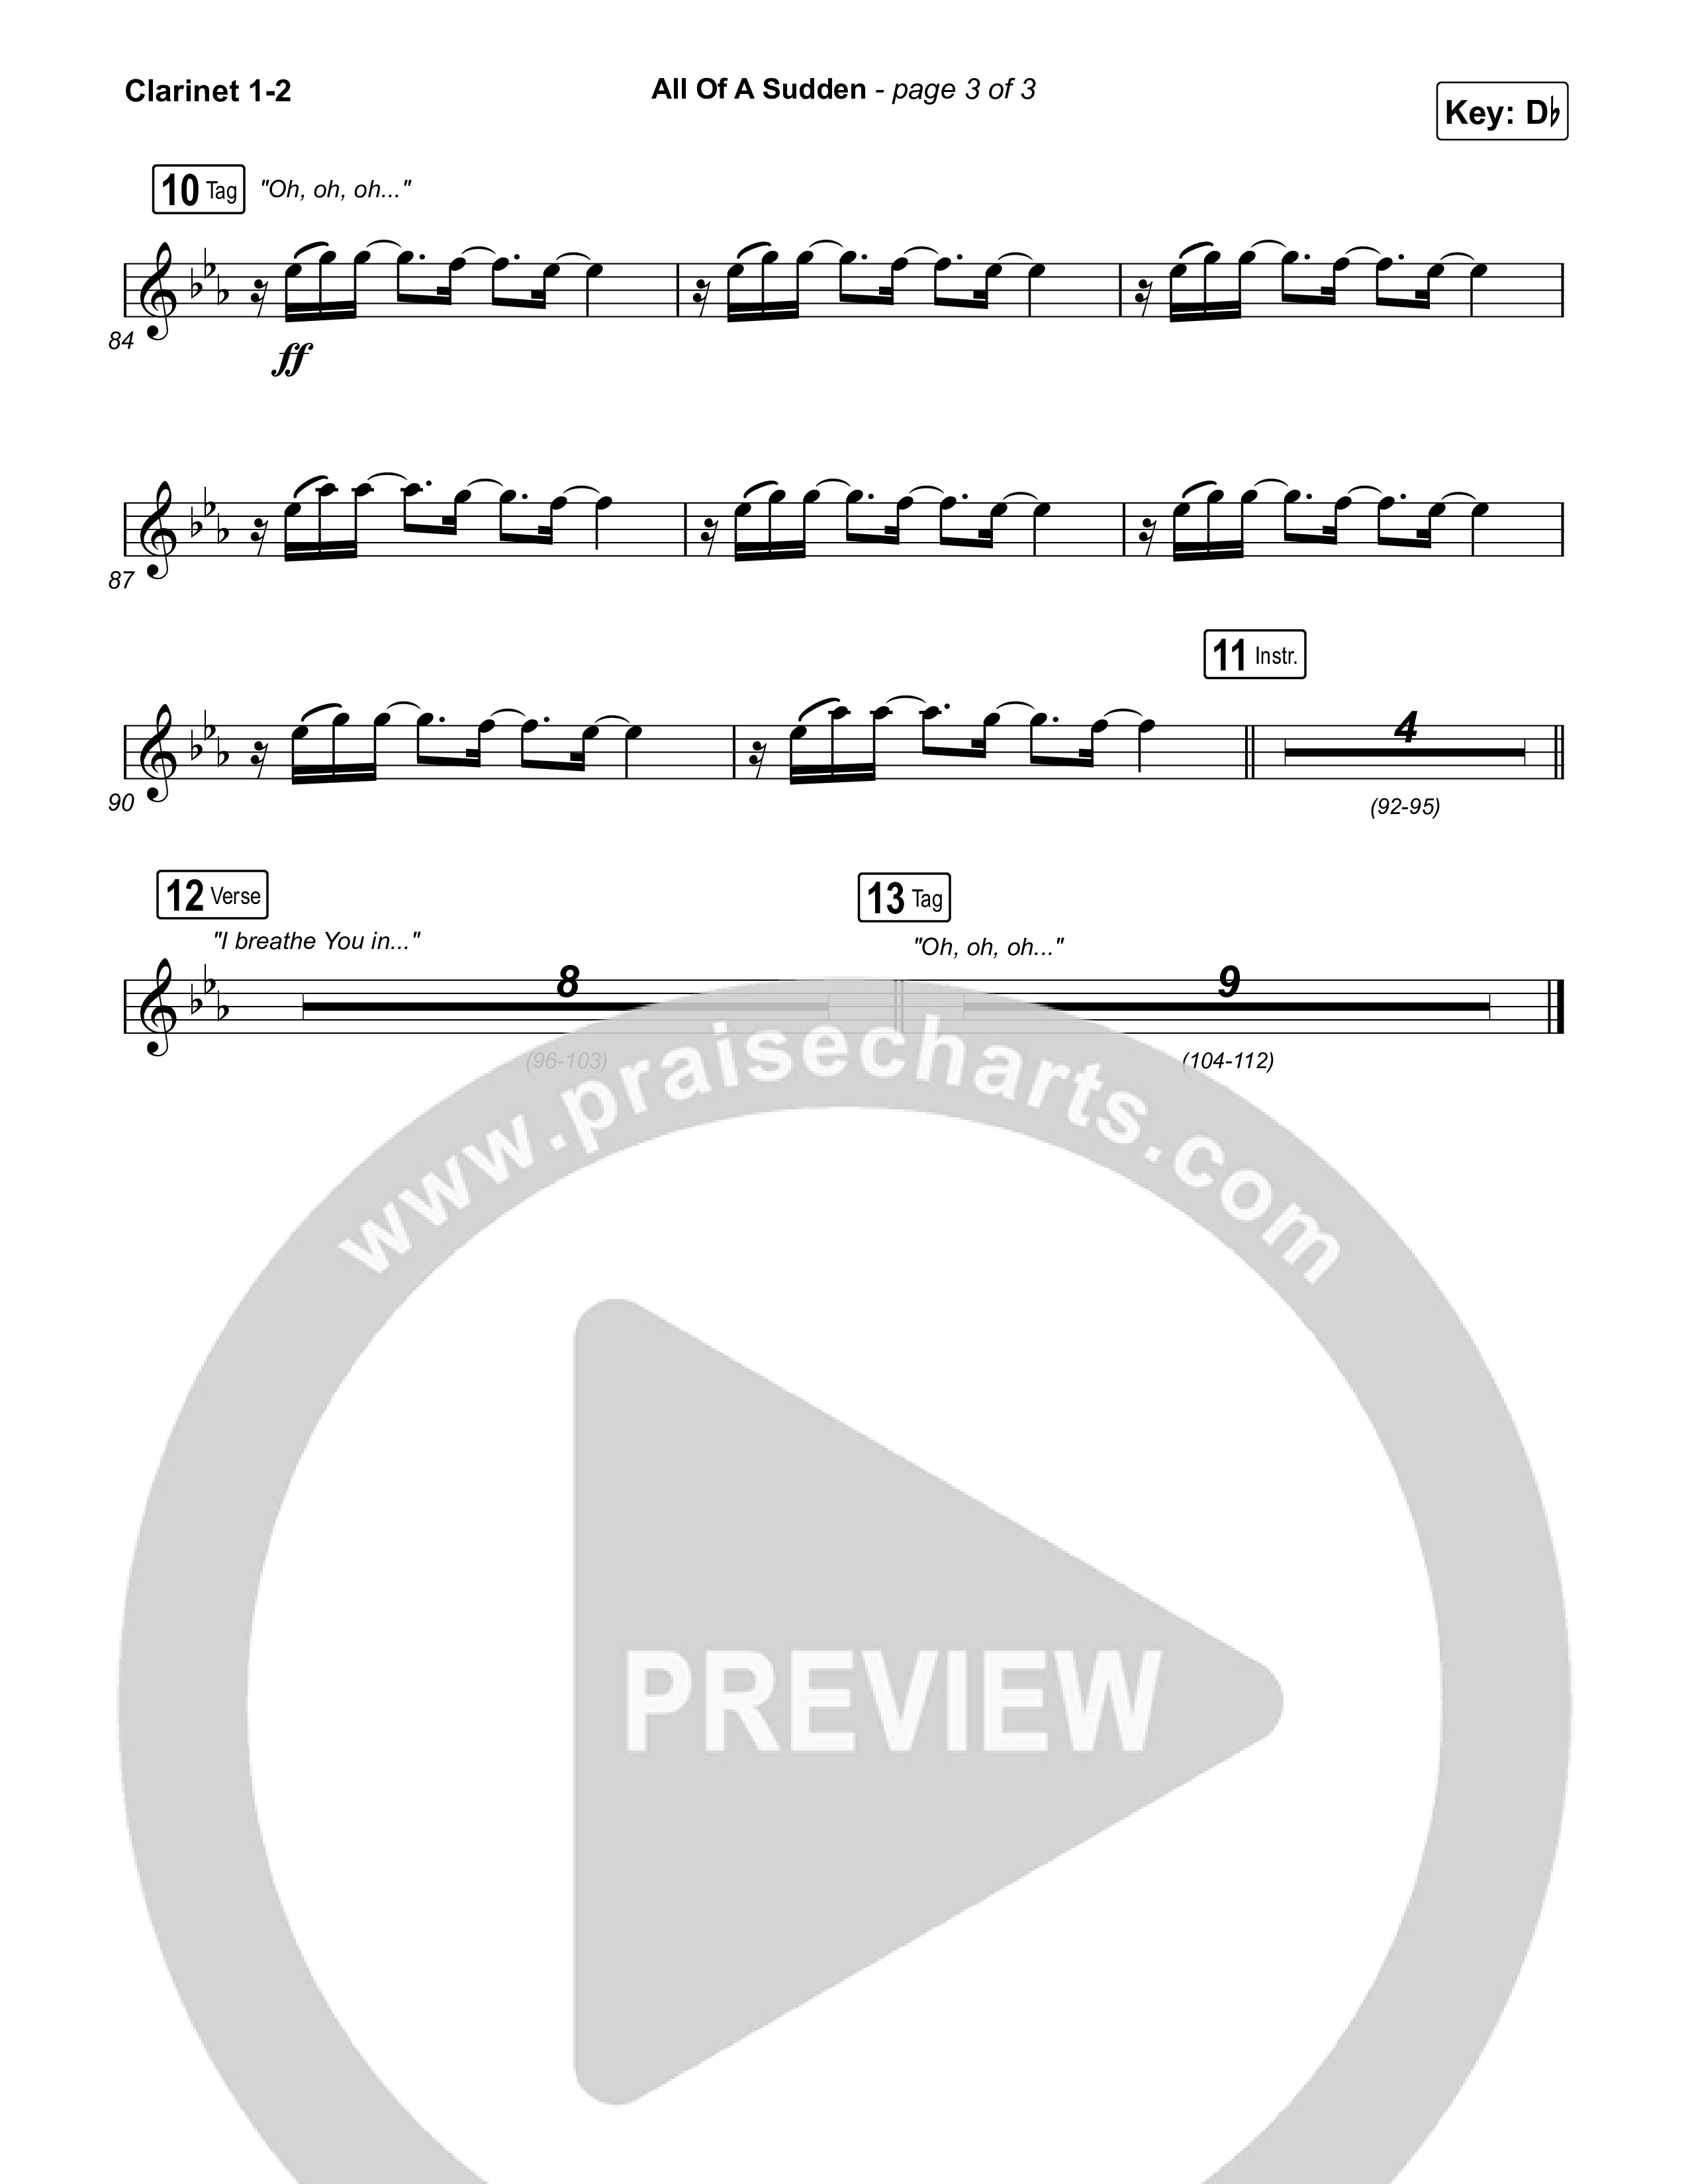 All Of A Sudden Clarinet 1,2 (Elevation Worship / Tiffany Hudson)